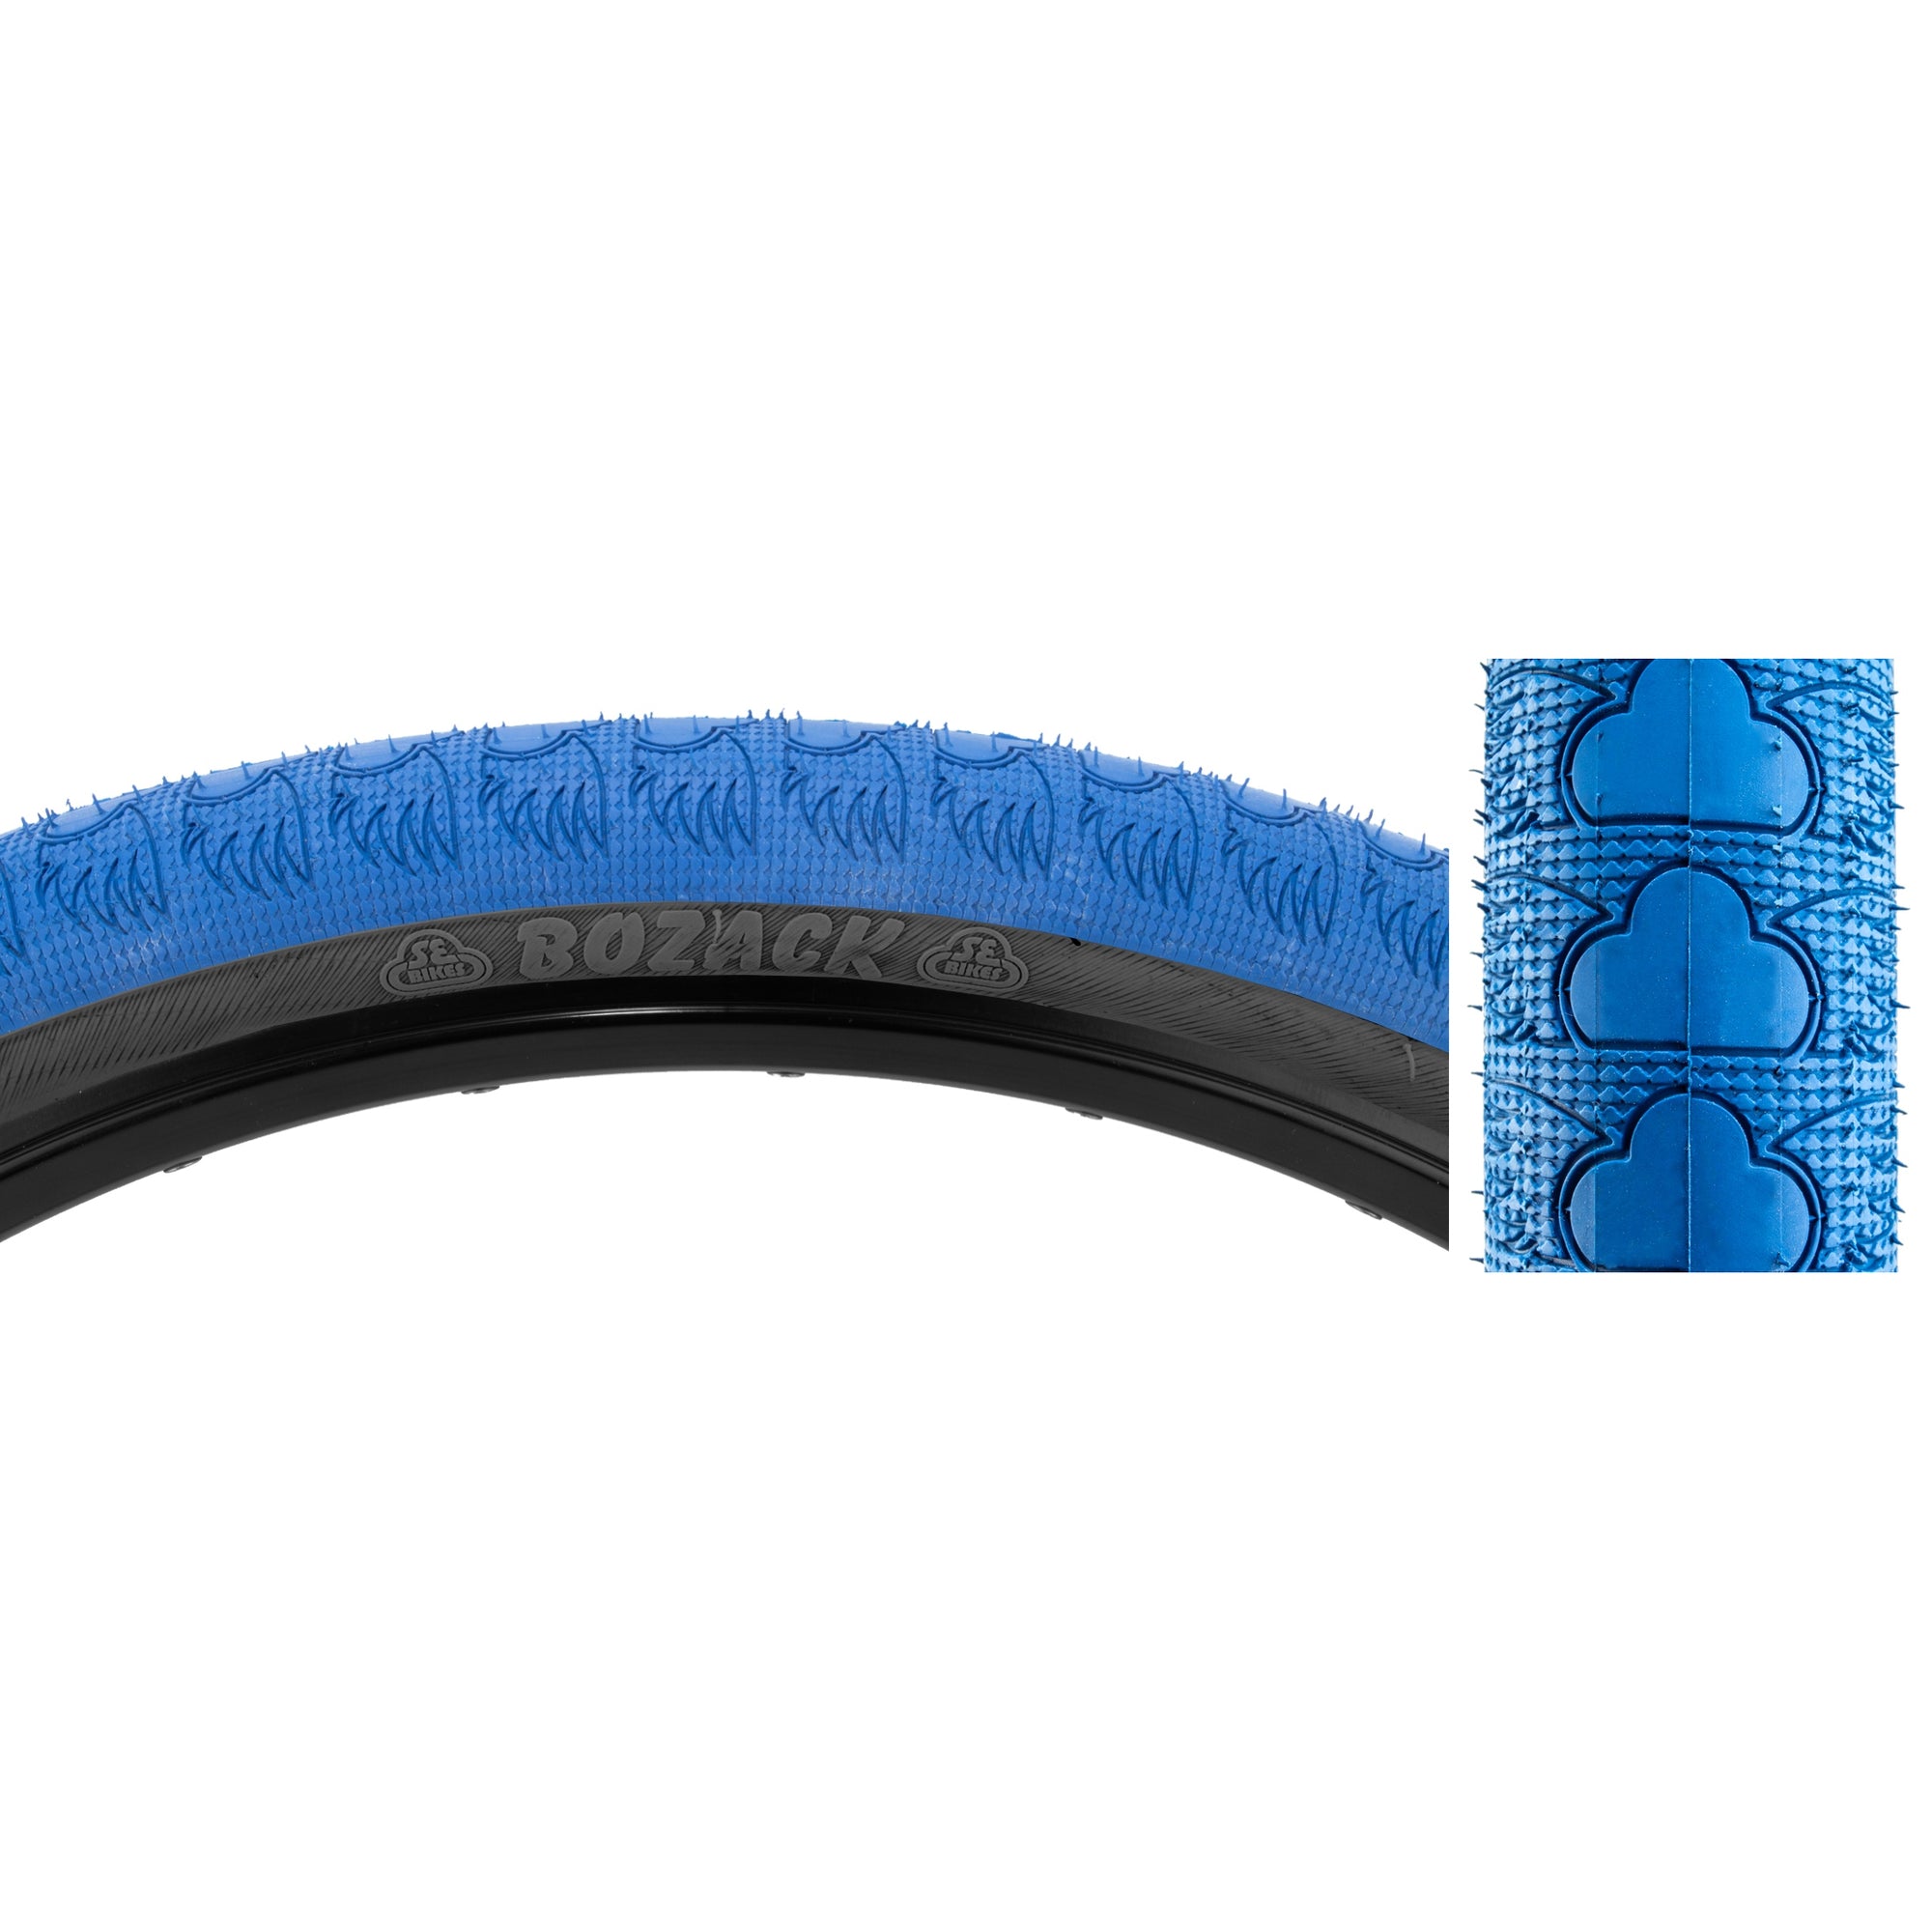 24x2.4 SE Racing Bozack BMX Tire - Blue w/ Black Sidewall